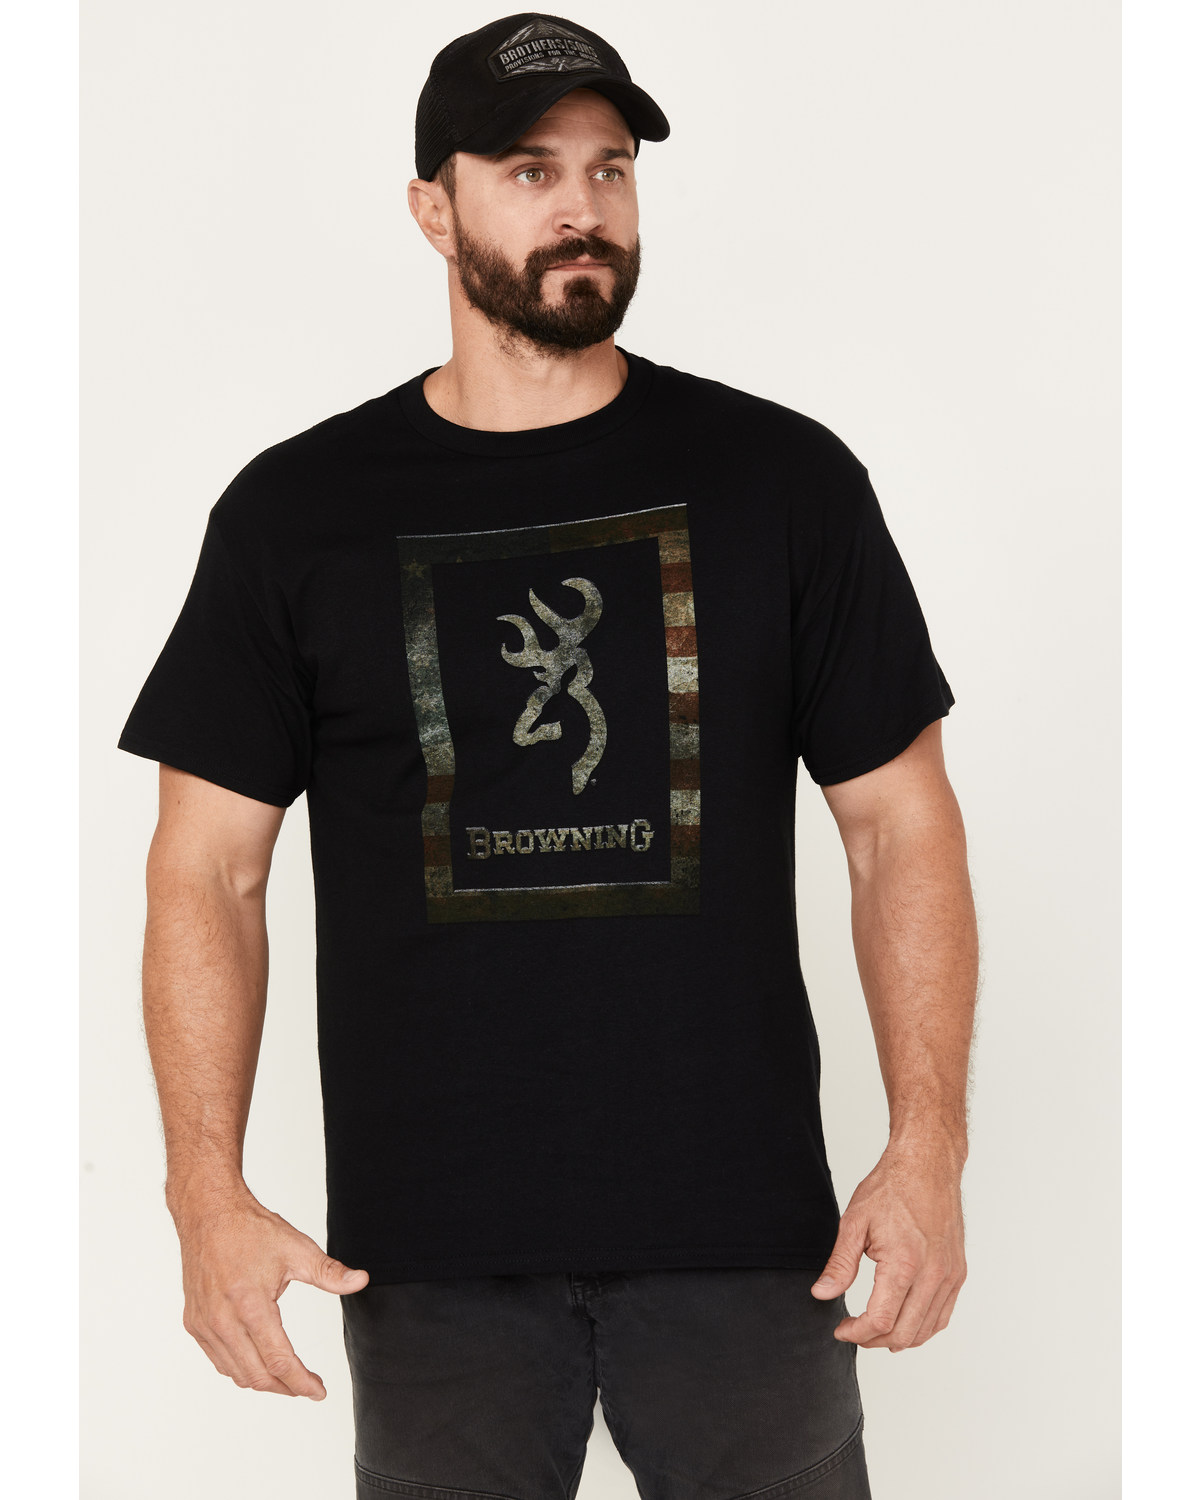 Browning Men's Americana Short Sleeve Graphic T-Shirt